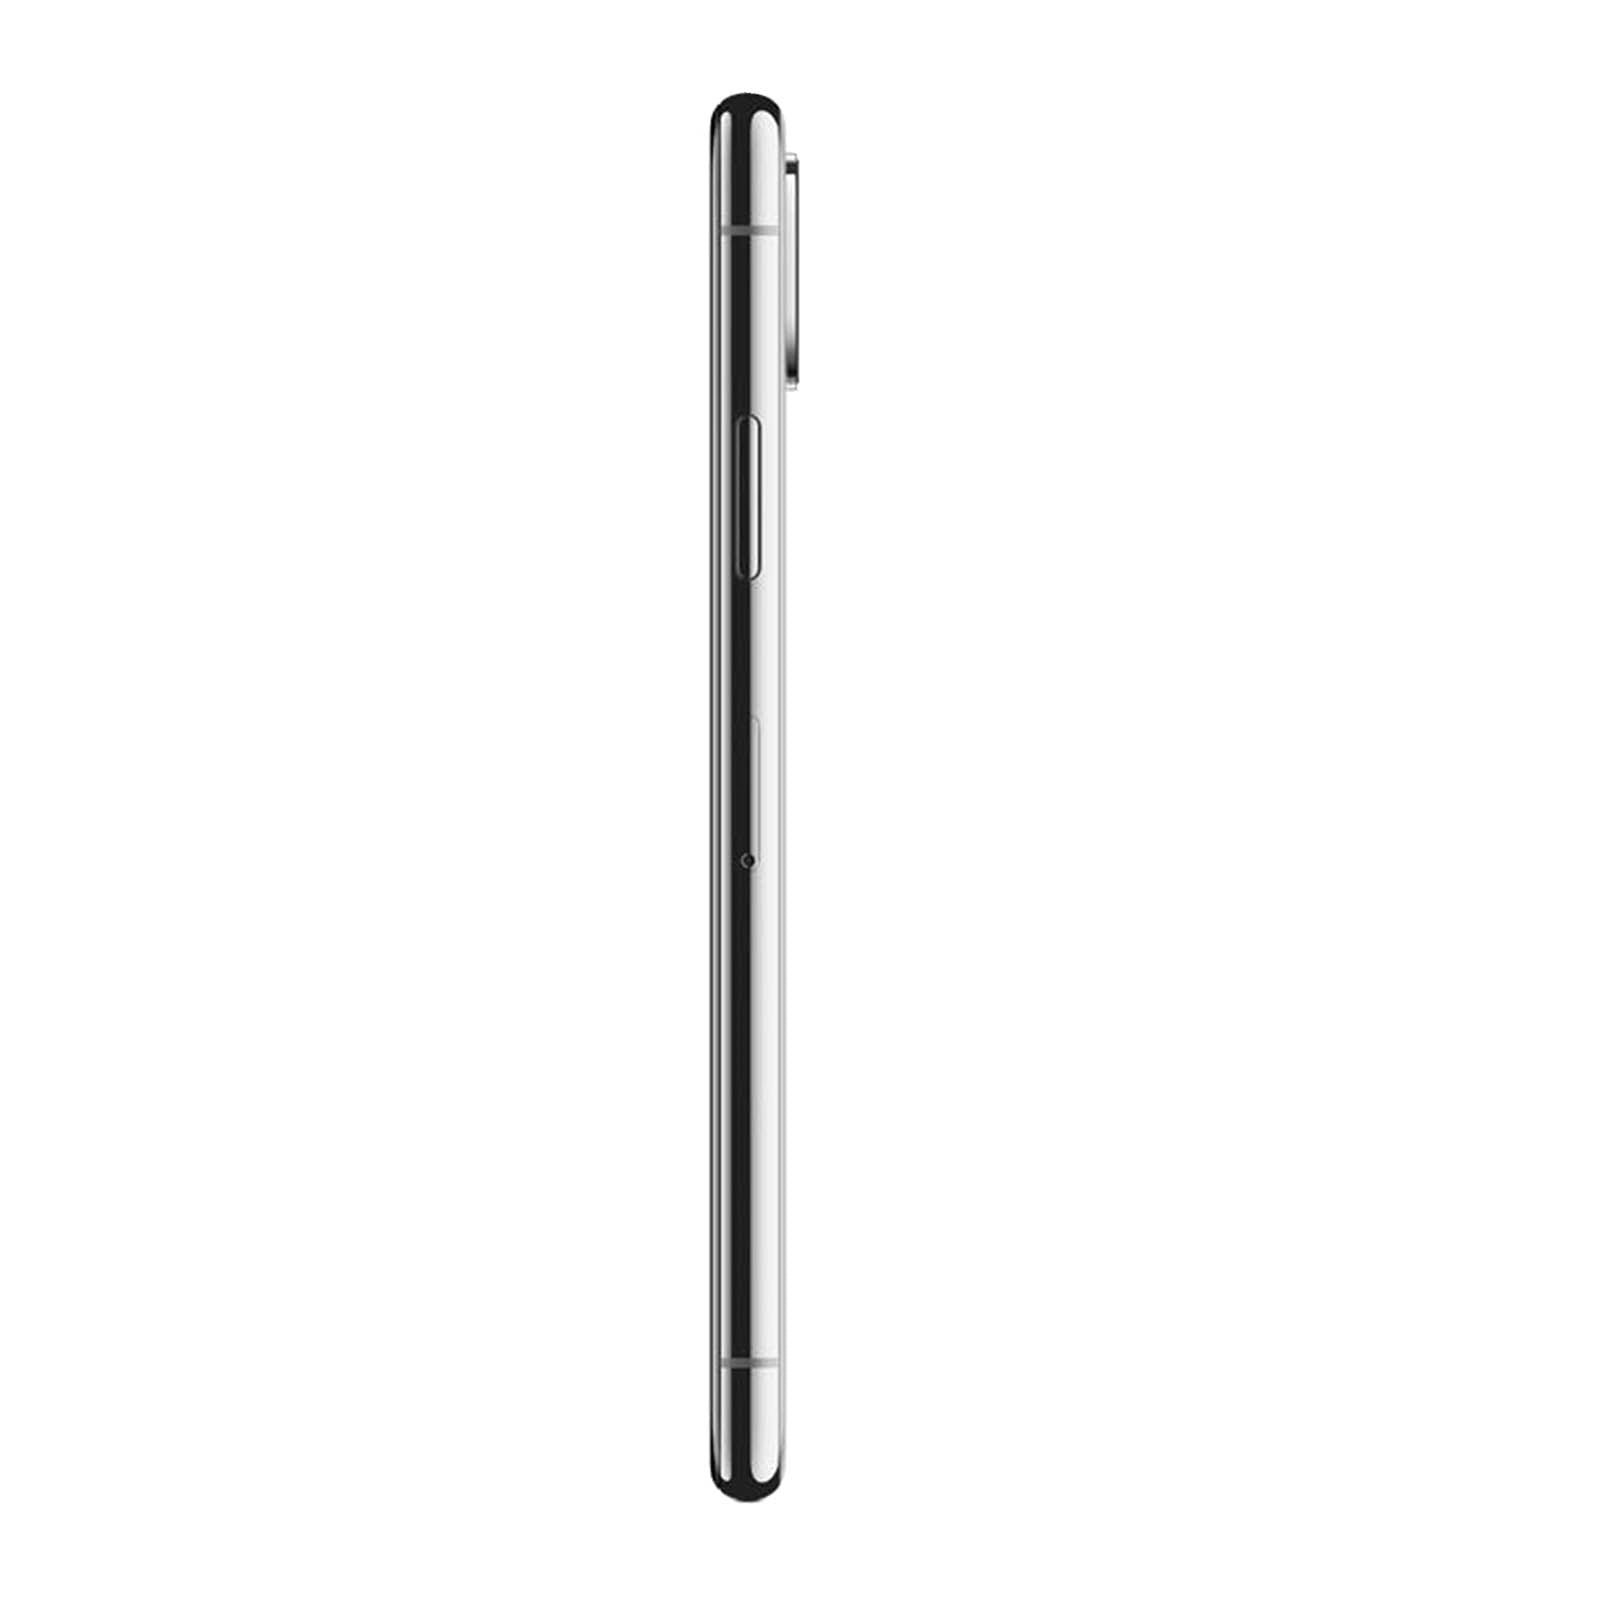 Apple iPhone XS 256GB Space Grey Pristine - Verizon